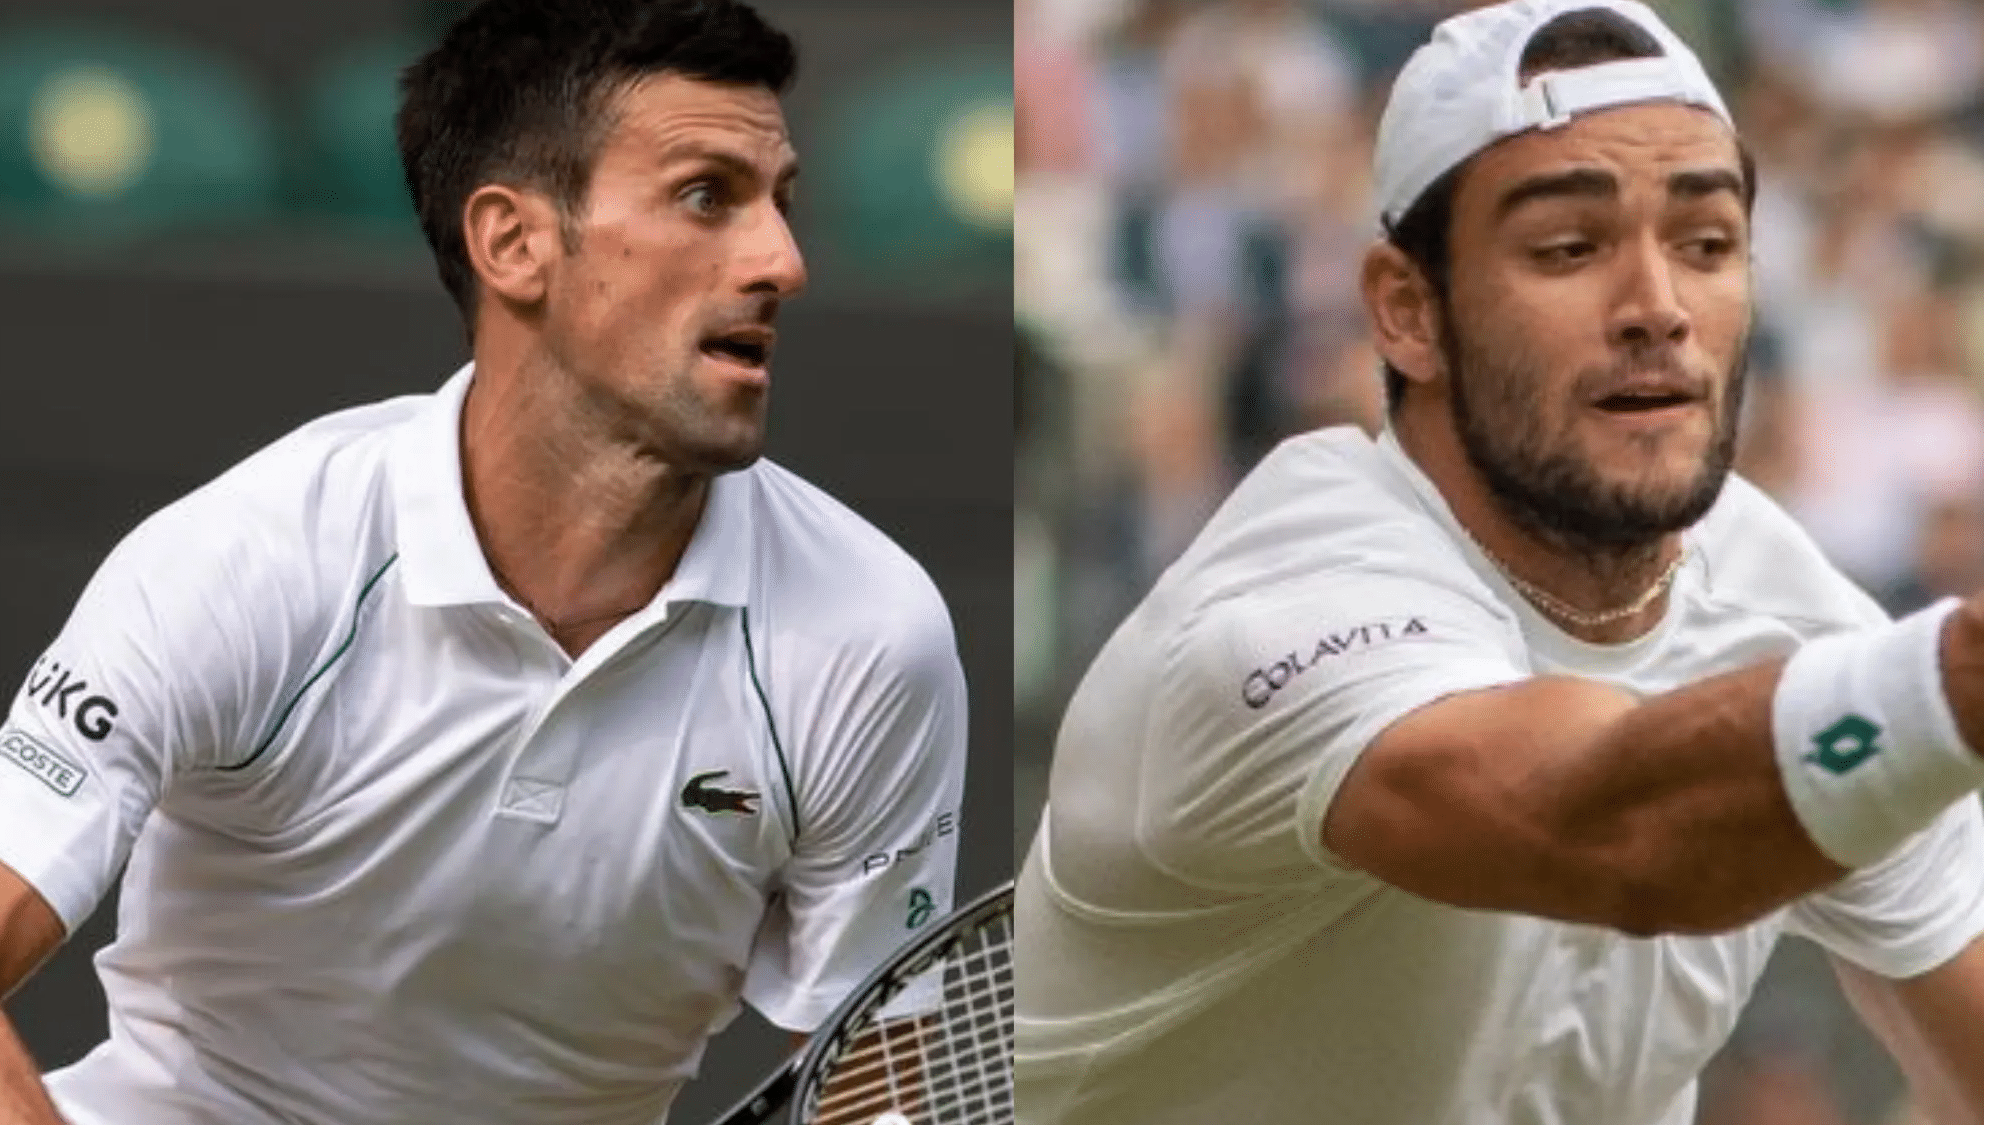 Matteo Berrettini threatens to spoil Novak Djokovic’s 20th Slam party at Wimbledon final